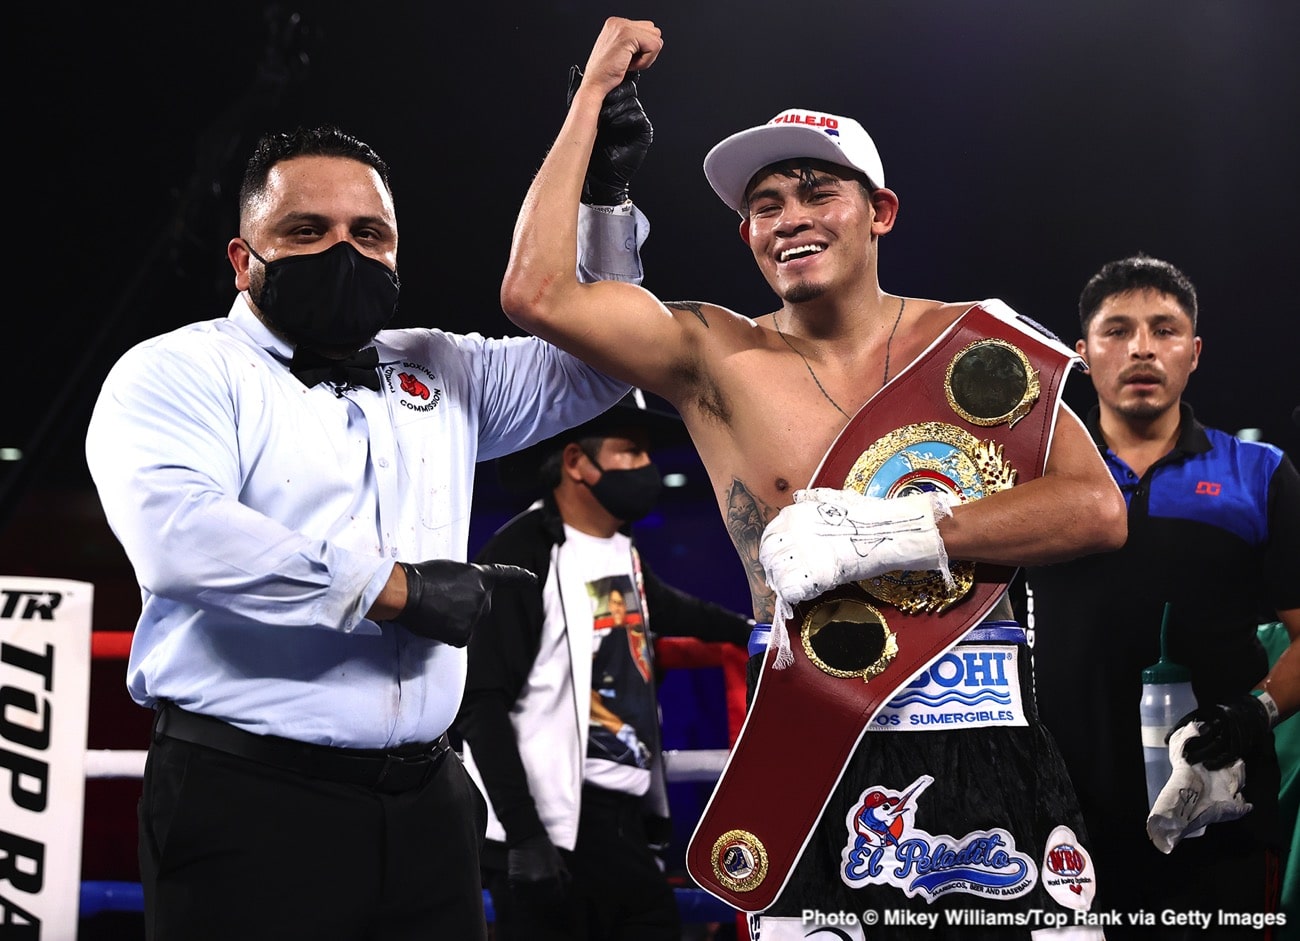 Emanuel Navarrete stops Diaz - Boxing Results